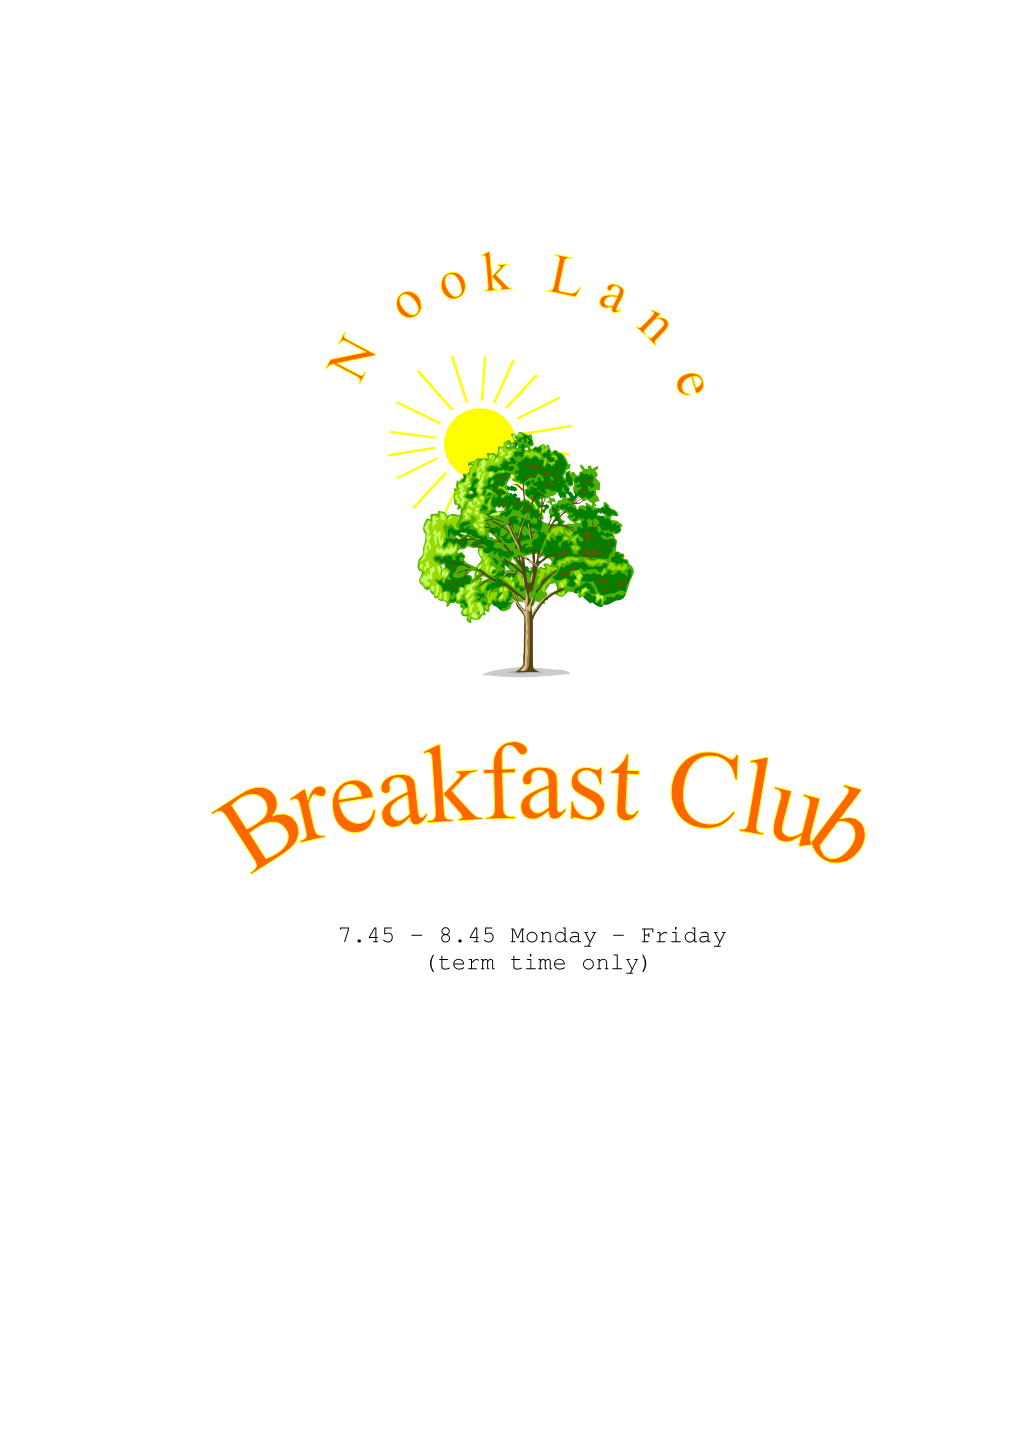 The Breakfast Club Aims